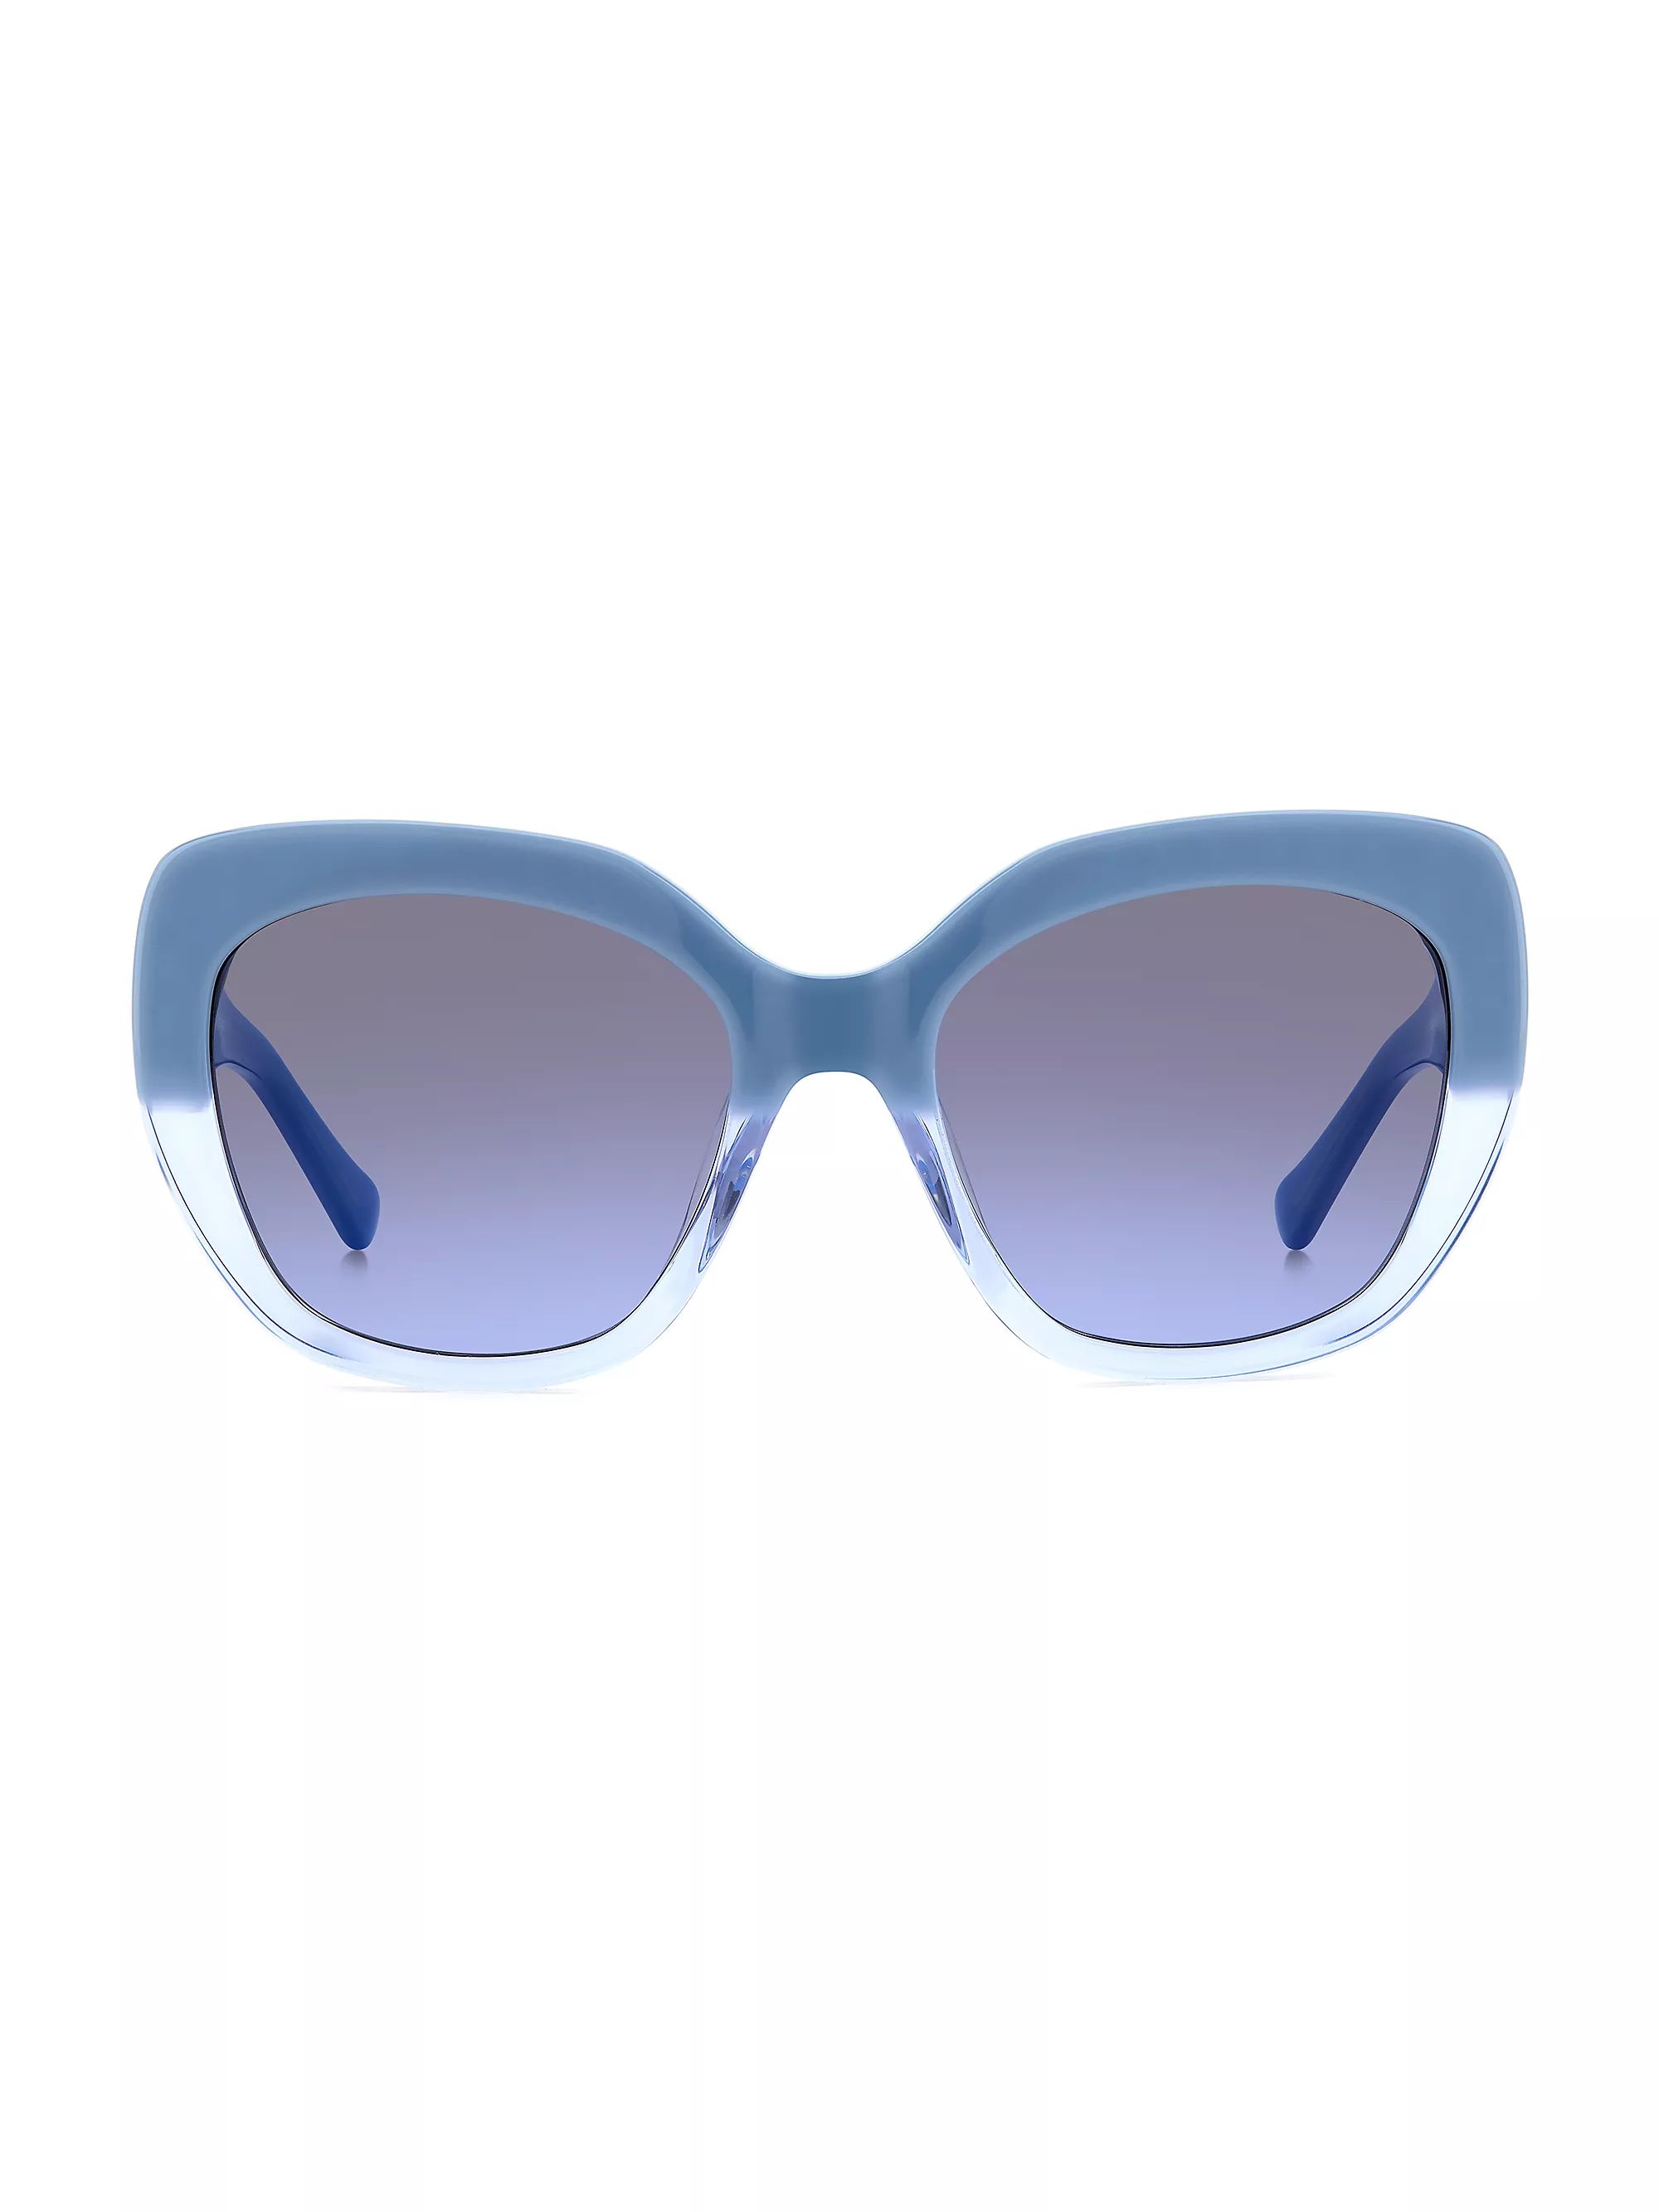 Shop kate spade new york Winslet 55MM Square Sunglasses | Saks Fifth Avenue | Saks Fifth Avenue